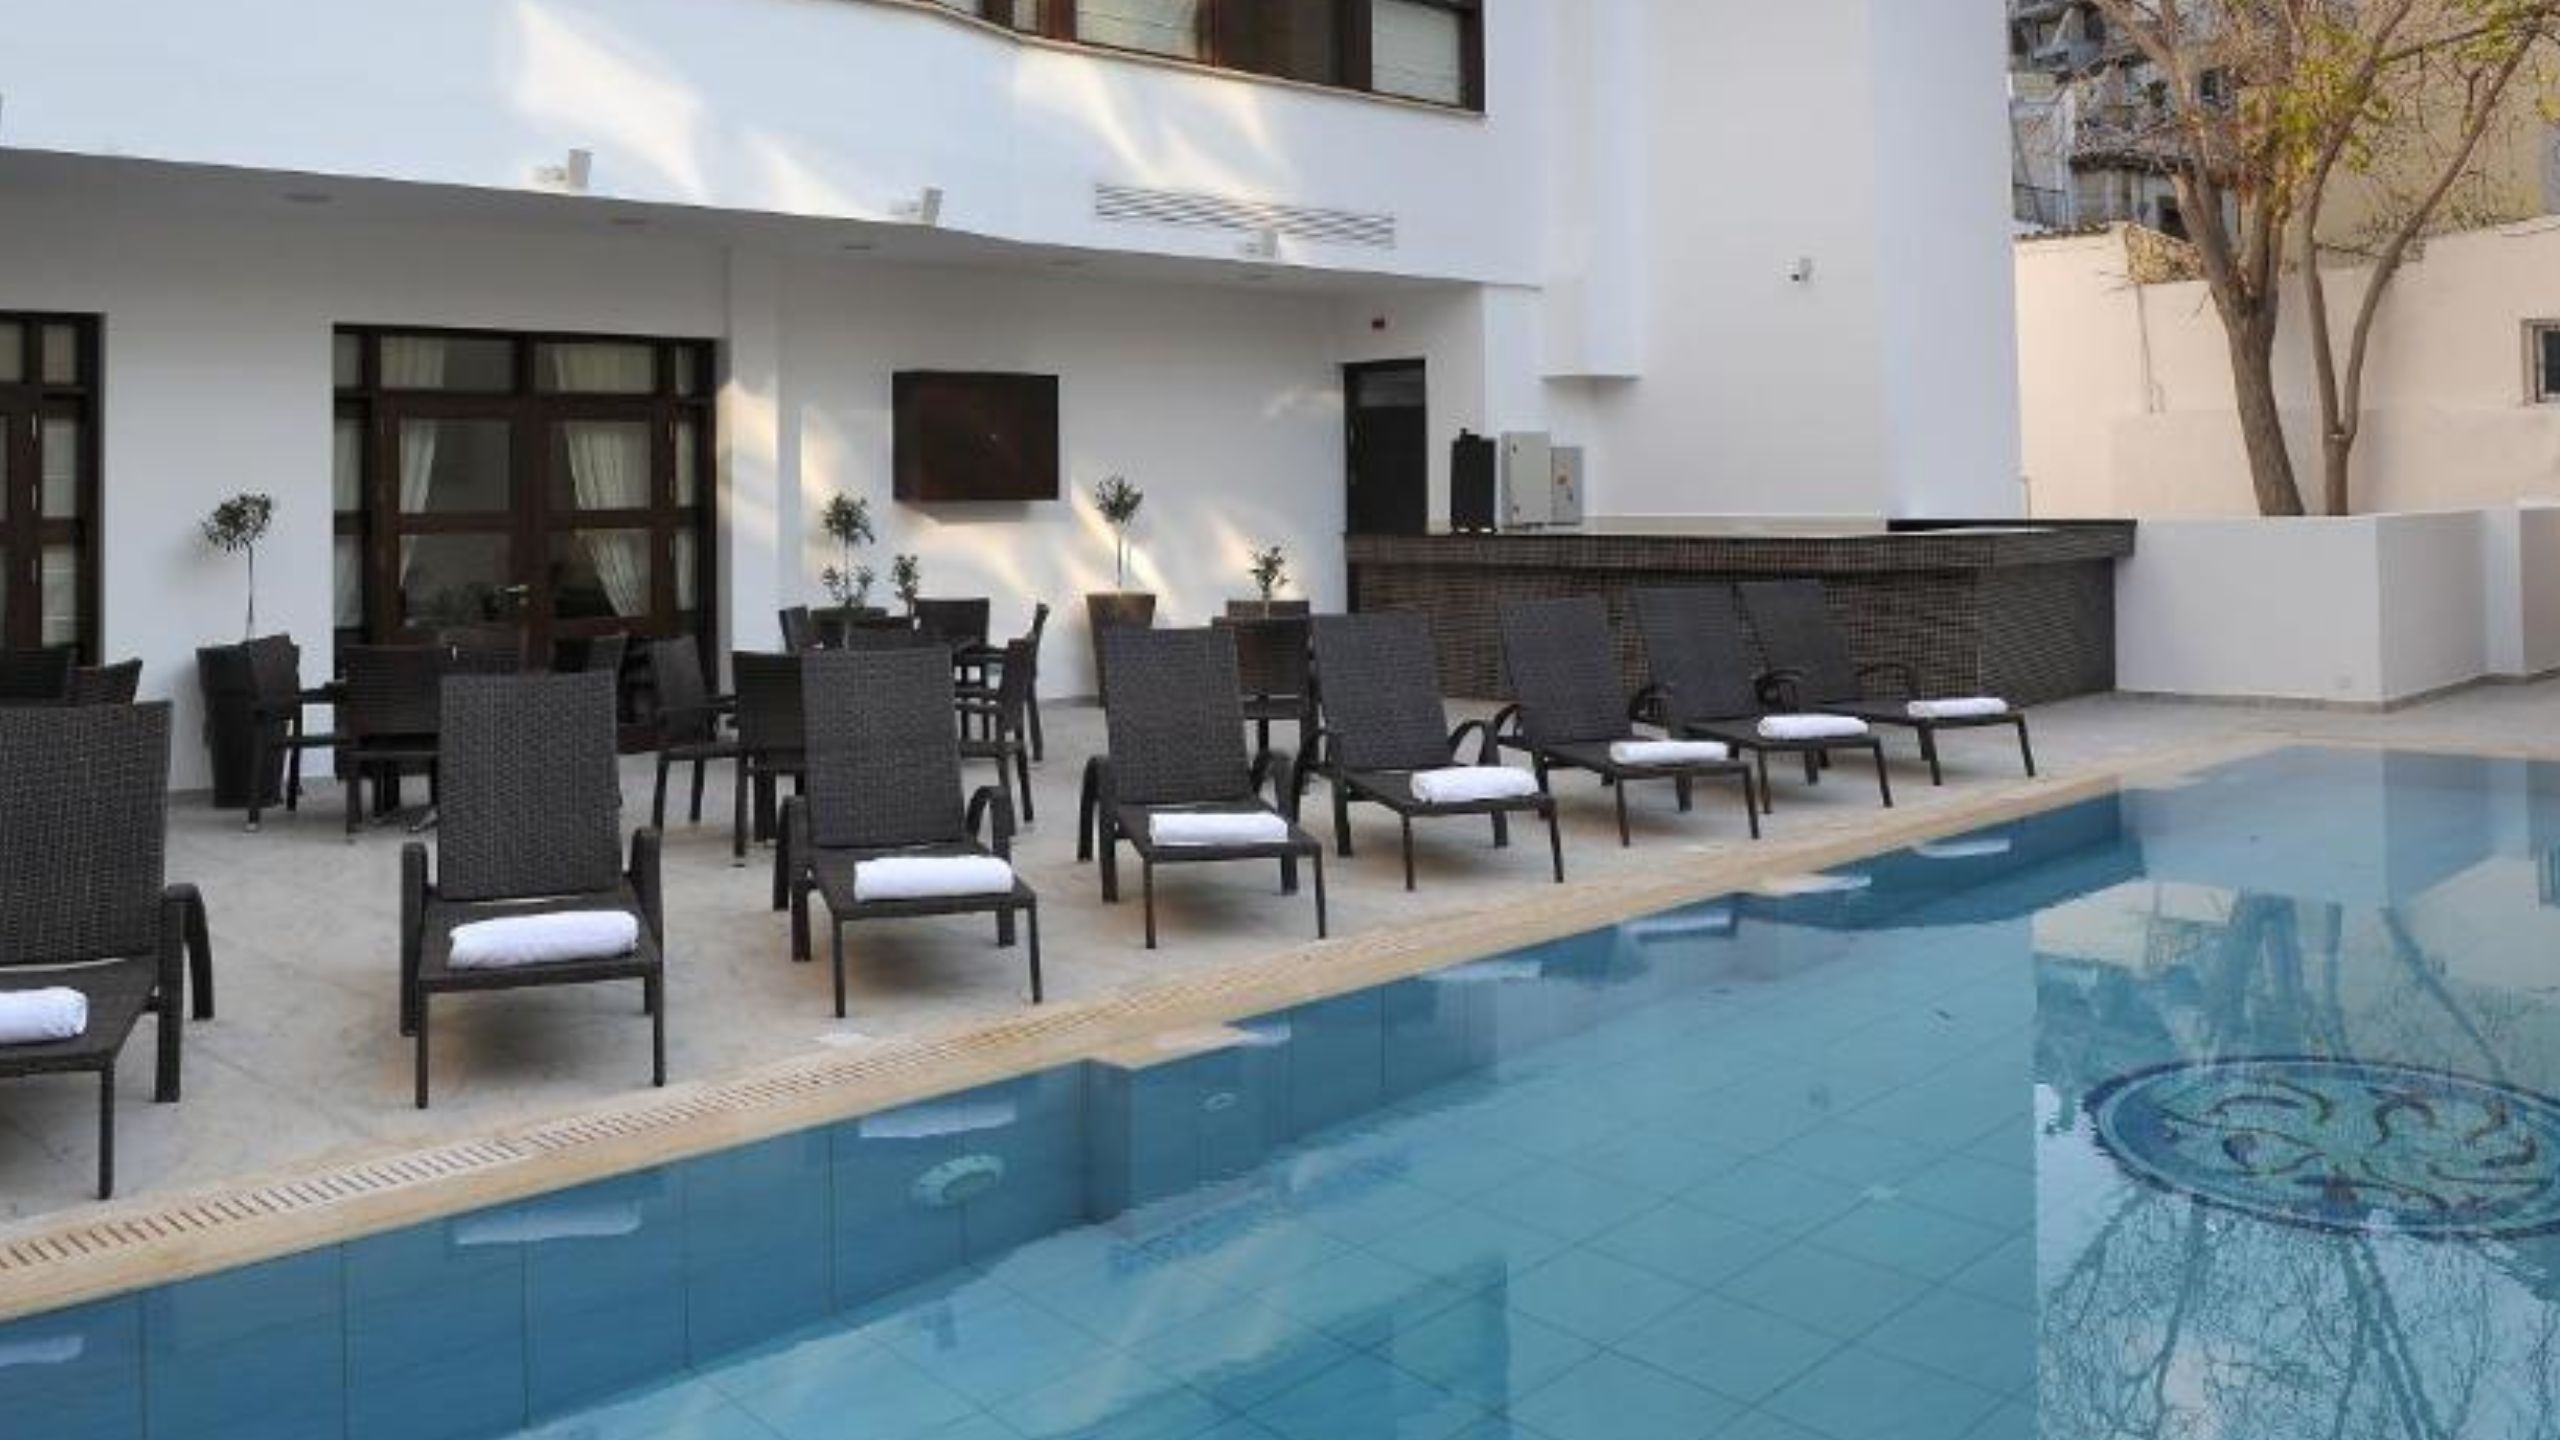 Royiatiko Hotel in Cyprus